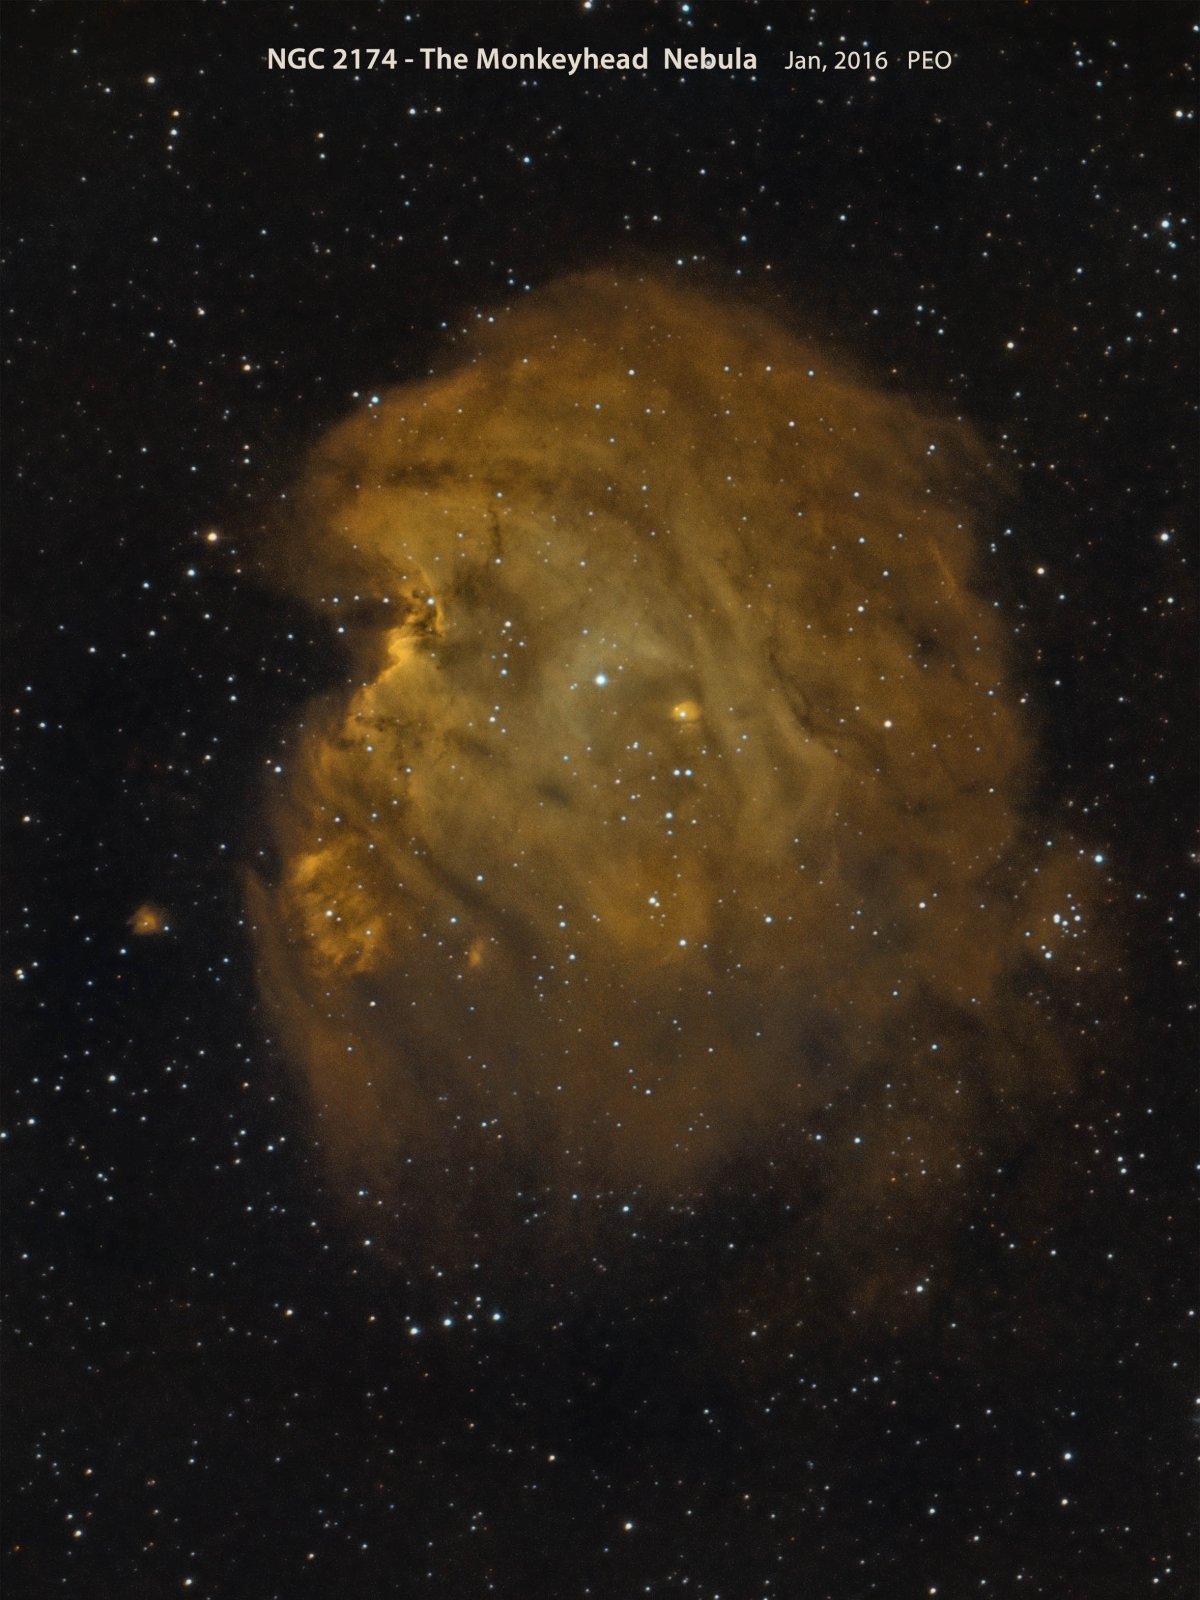 the Monkeyhead Nebula